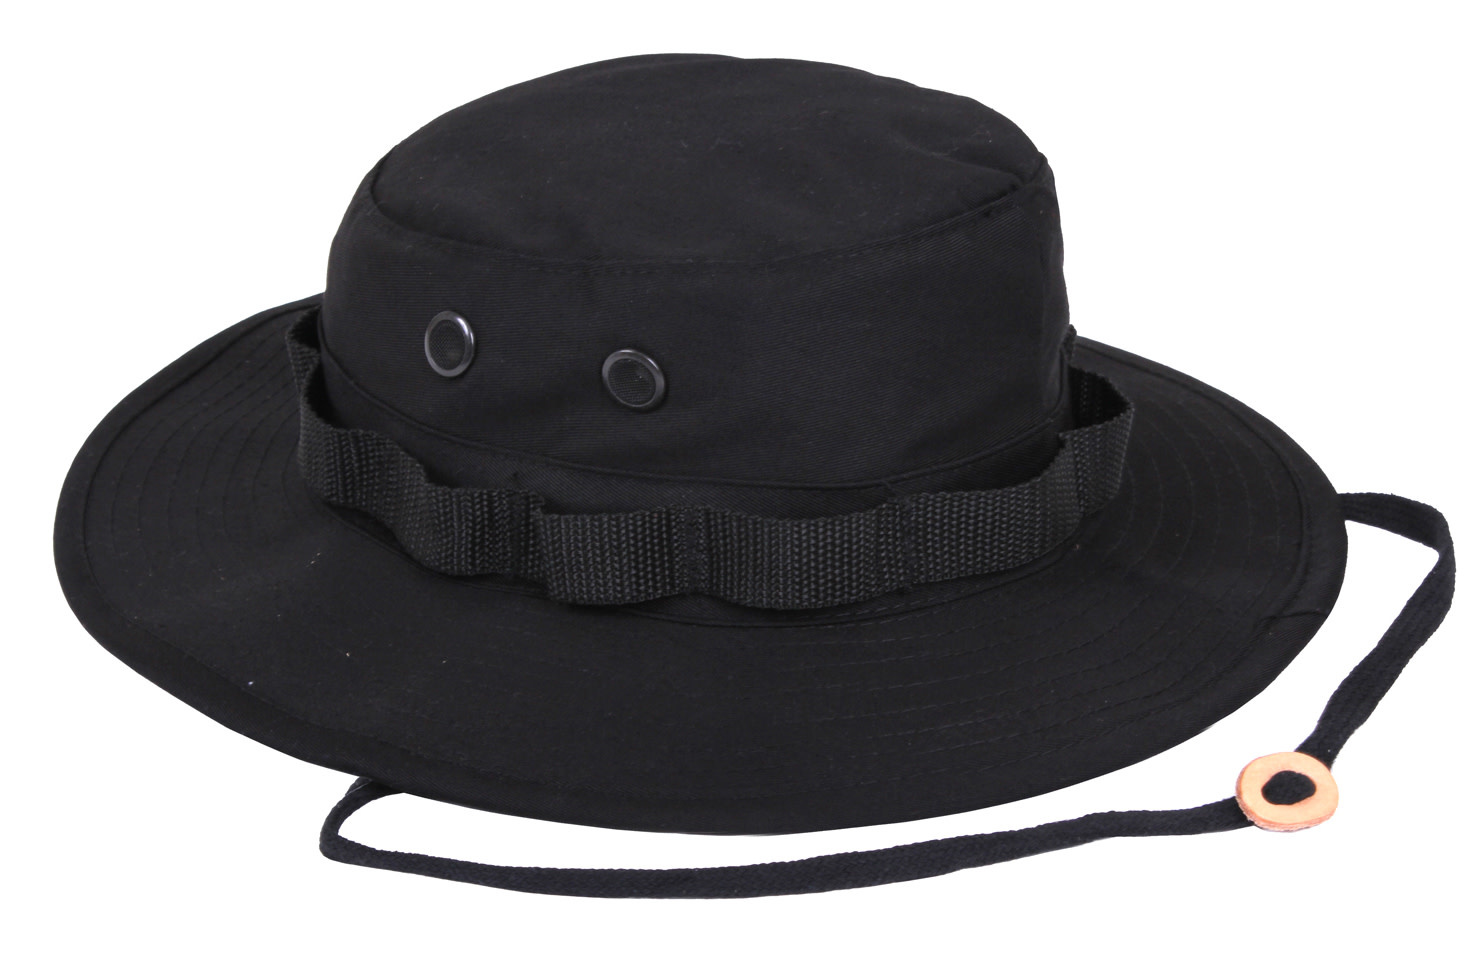 https://cdn.shoplightspeed.com/shops/616834/files/46475833/rothco-boonie-hat-rothco-black-military-style-hat.jpg